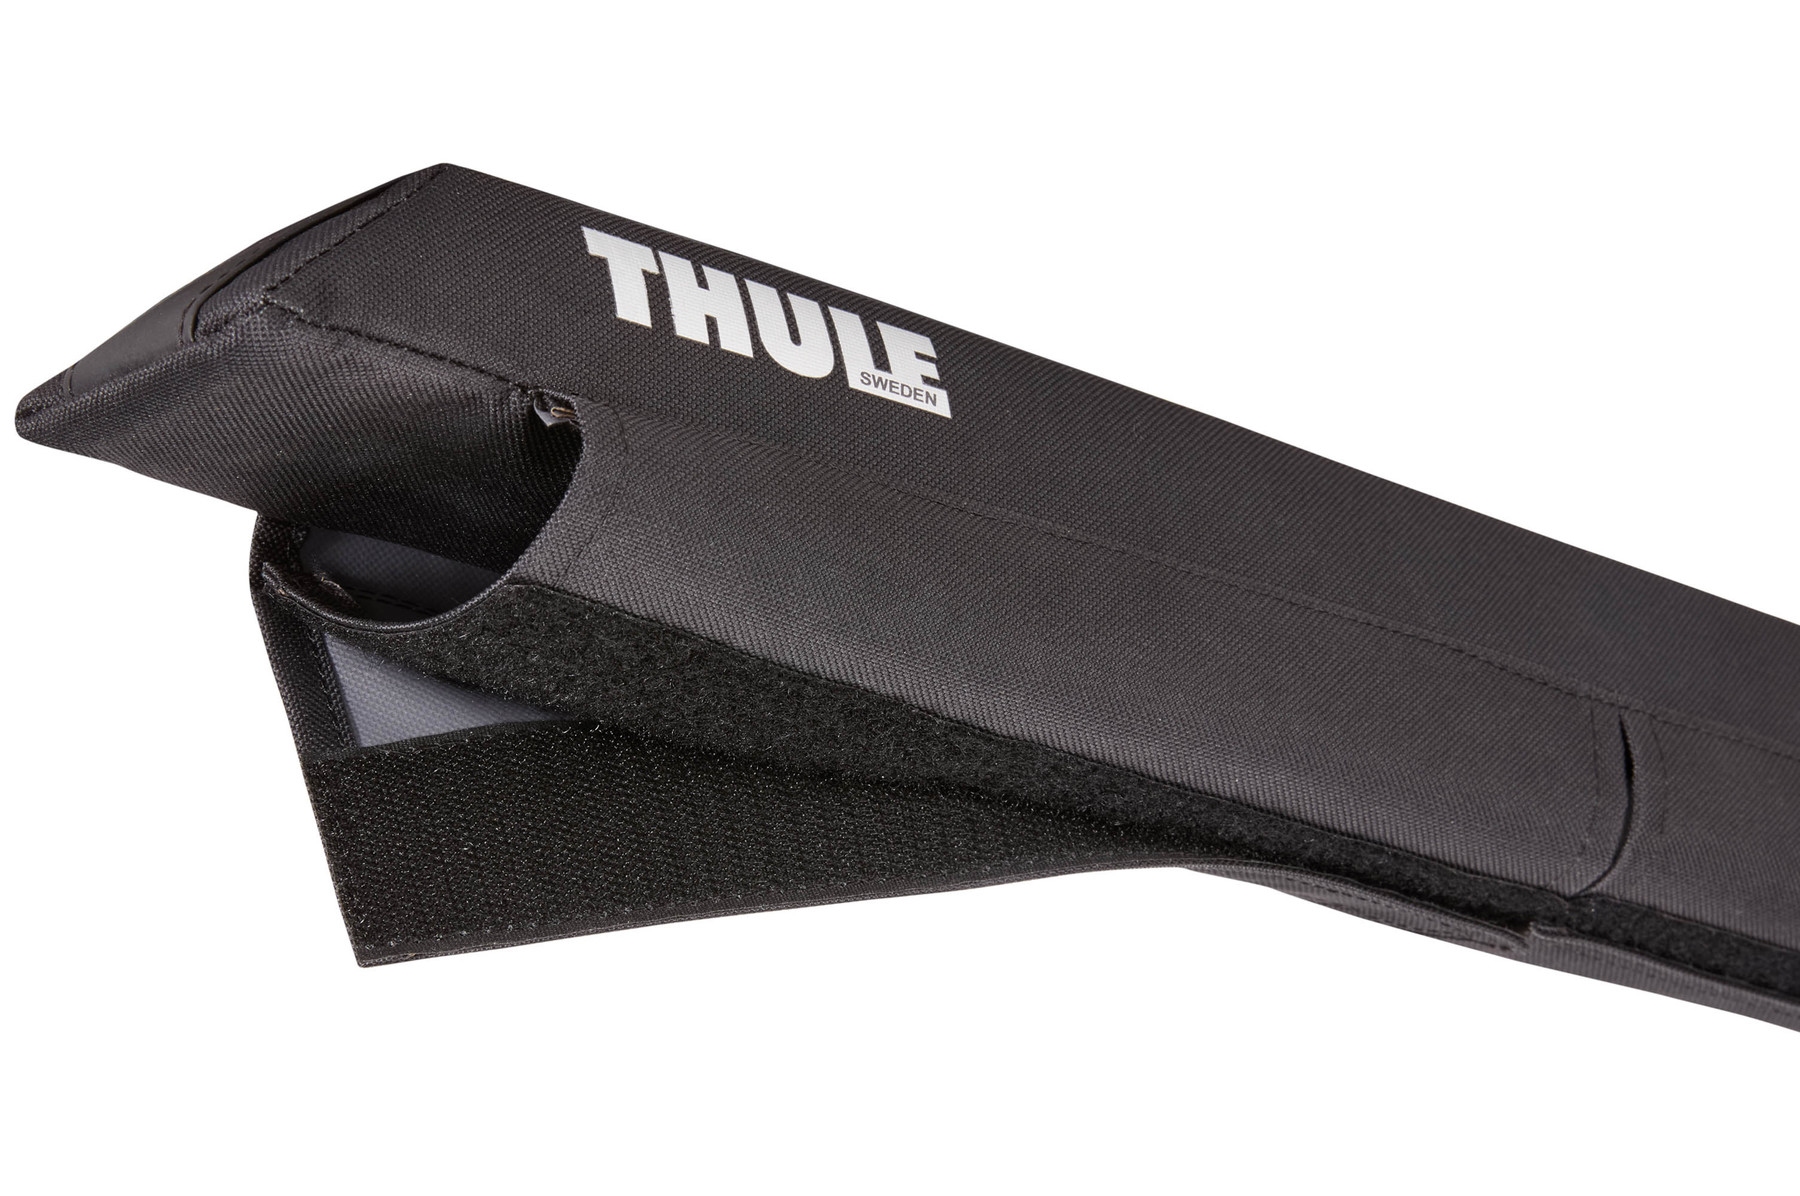 Thule Surf Pad Wide M 845